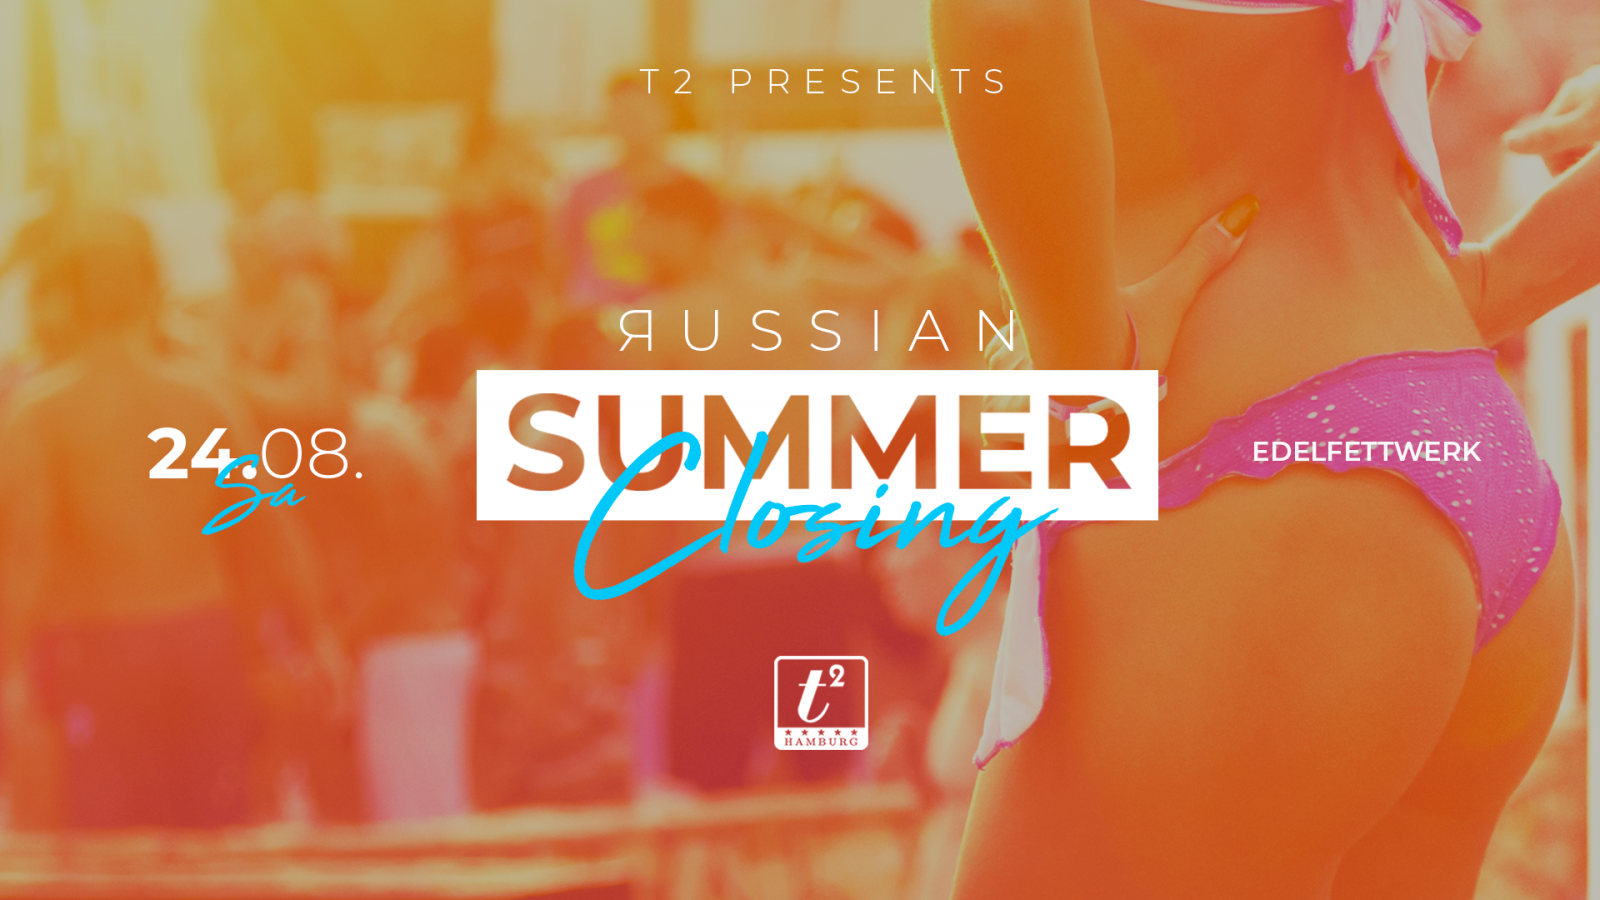 T2 Russian Beach Festival 2019 - summer closing